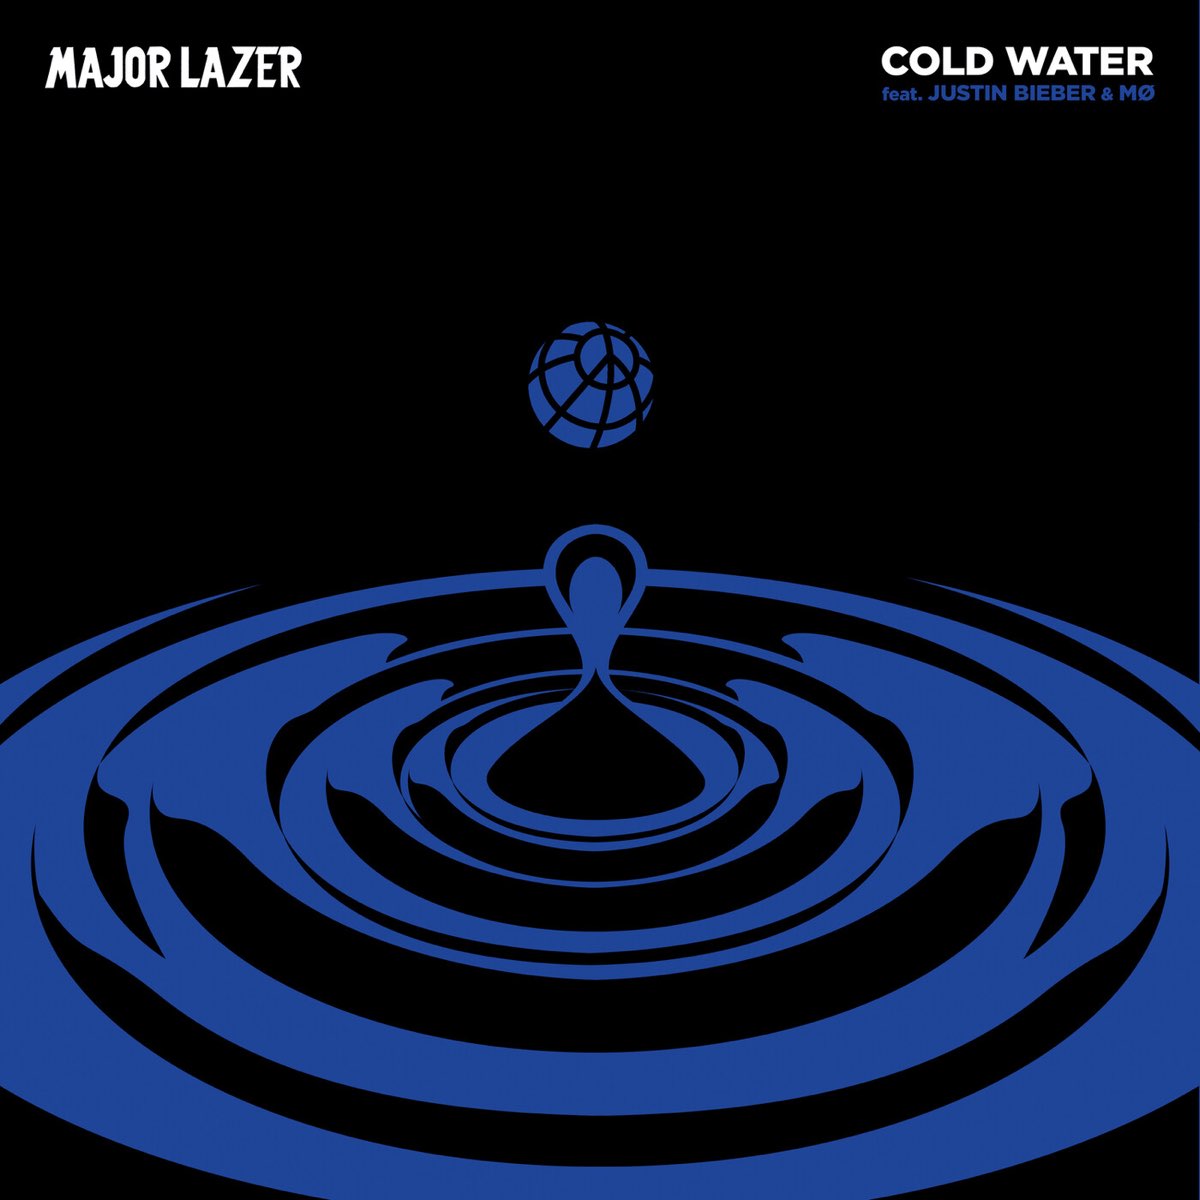 Cold Water (feat. Justin Bieber & MØ) - Single - Album by Major Lazer -  Apple Music